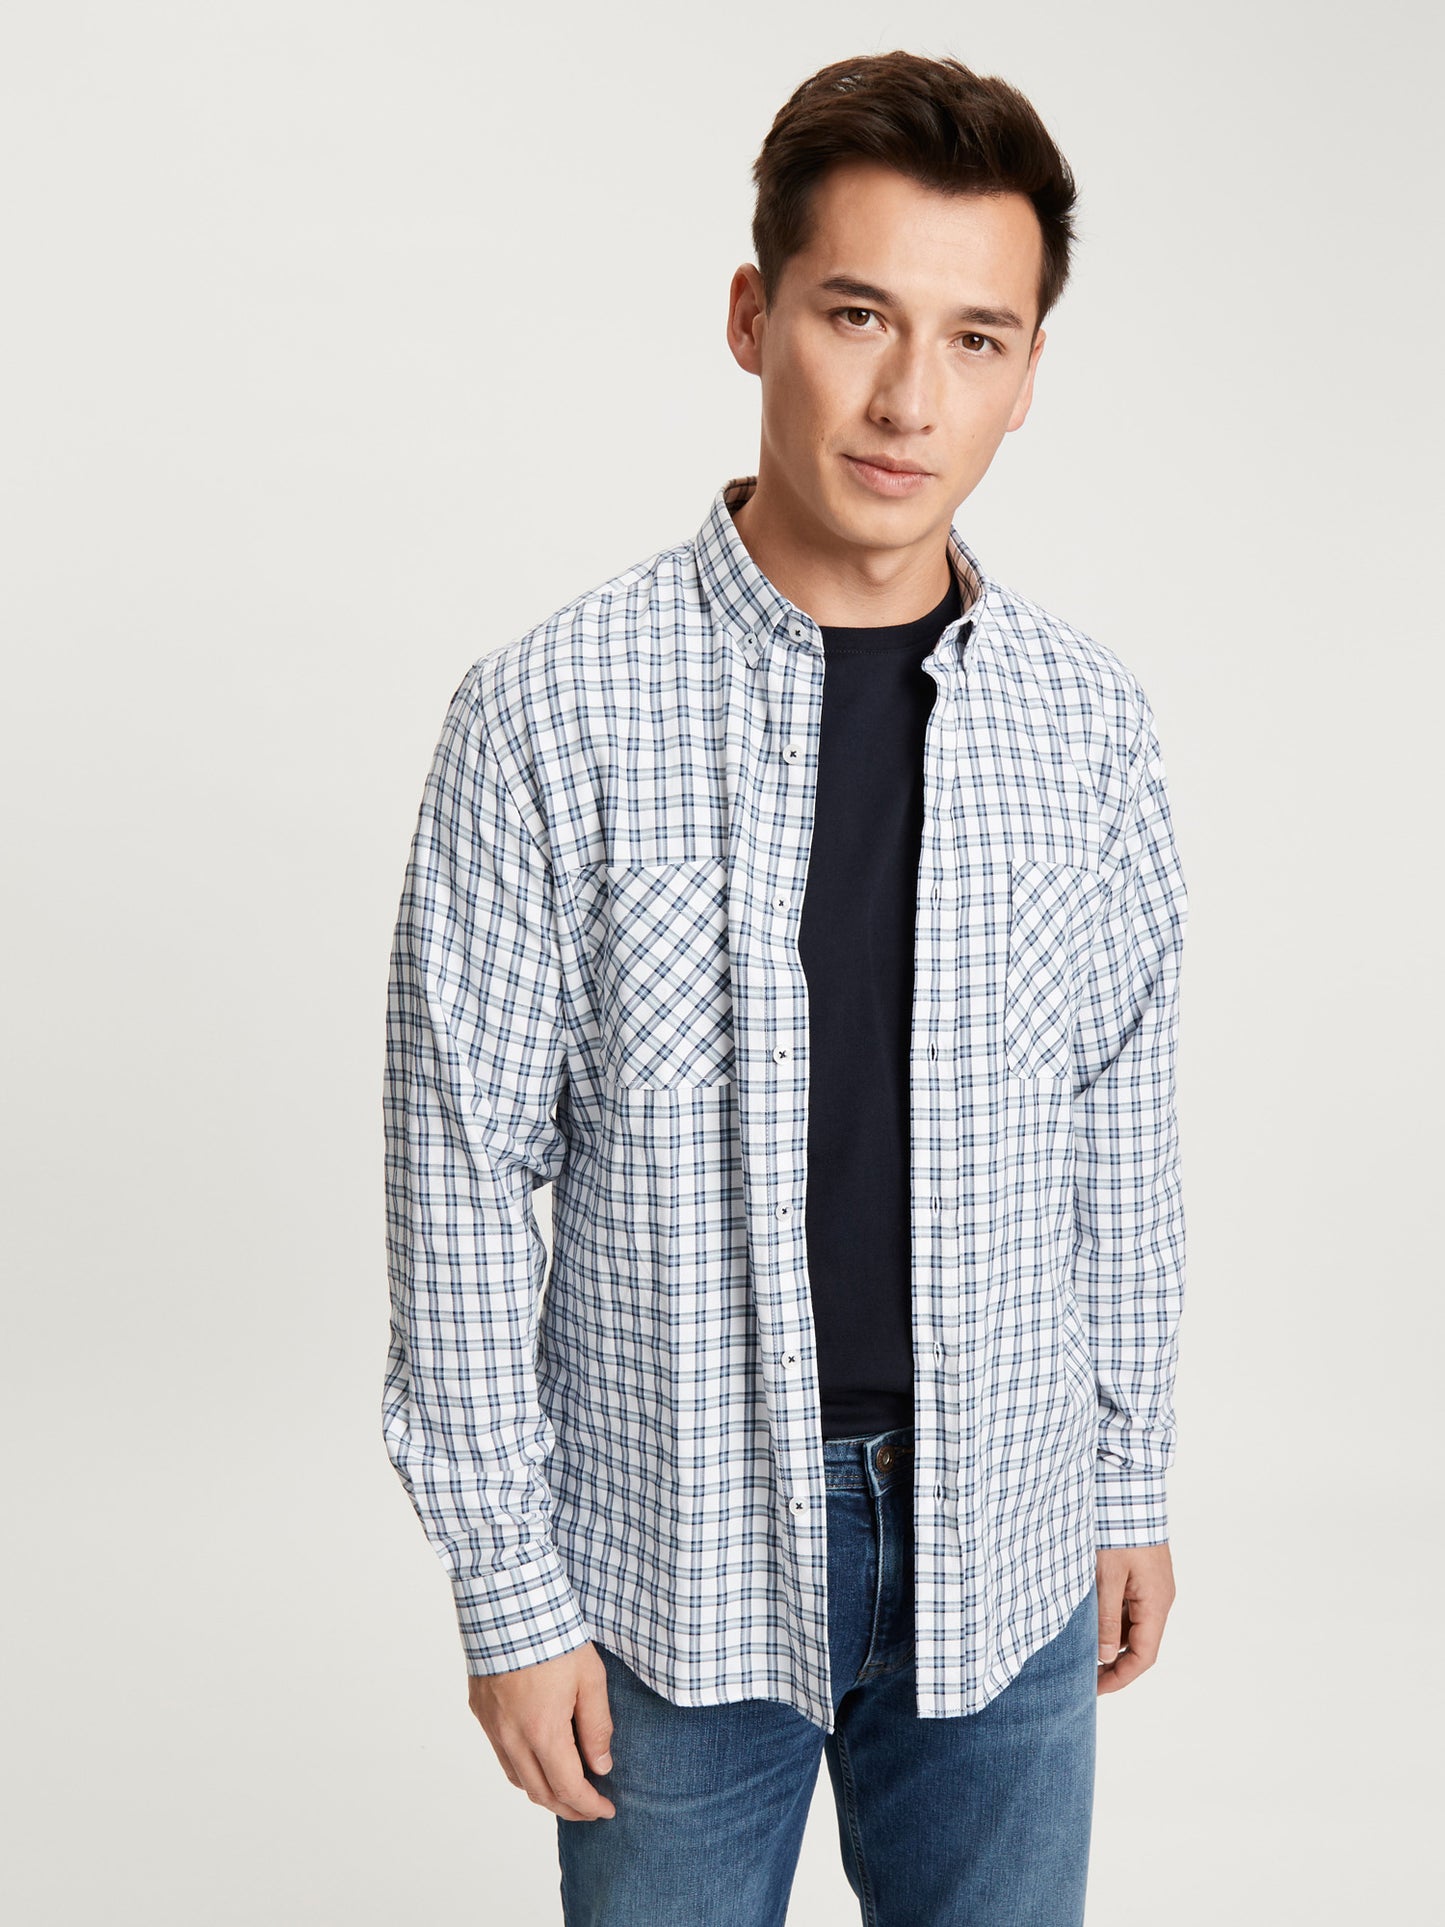 Men's regular long-sleeved shirt checked pattern blue and white